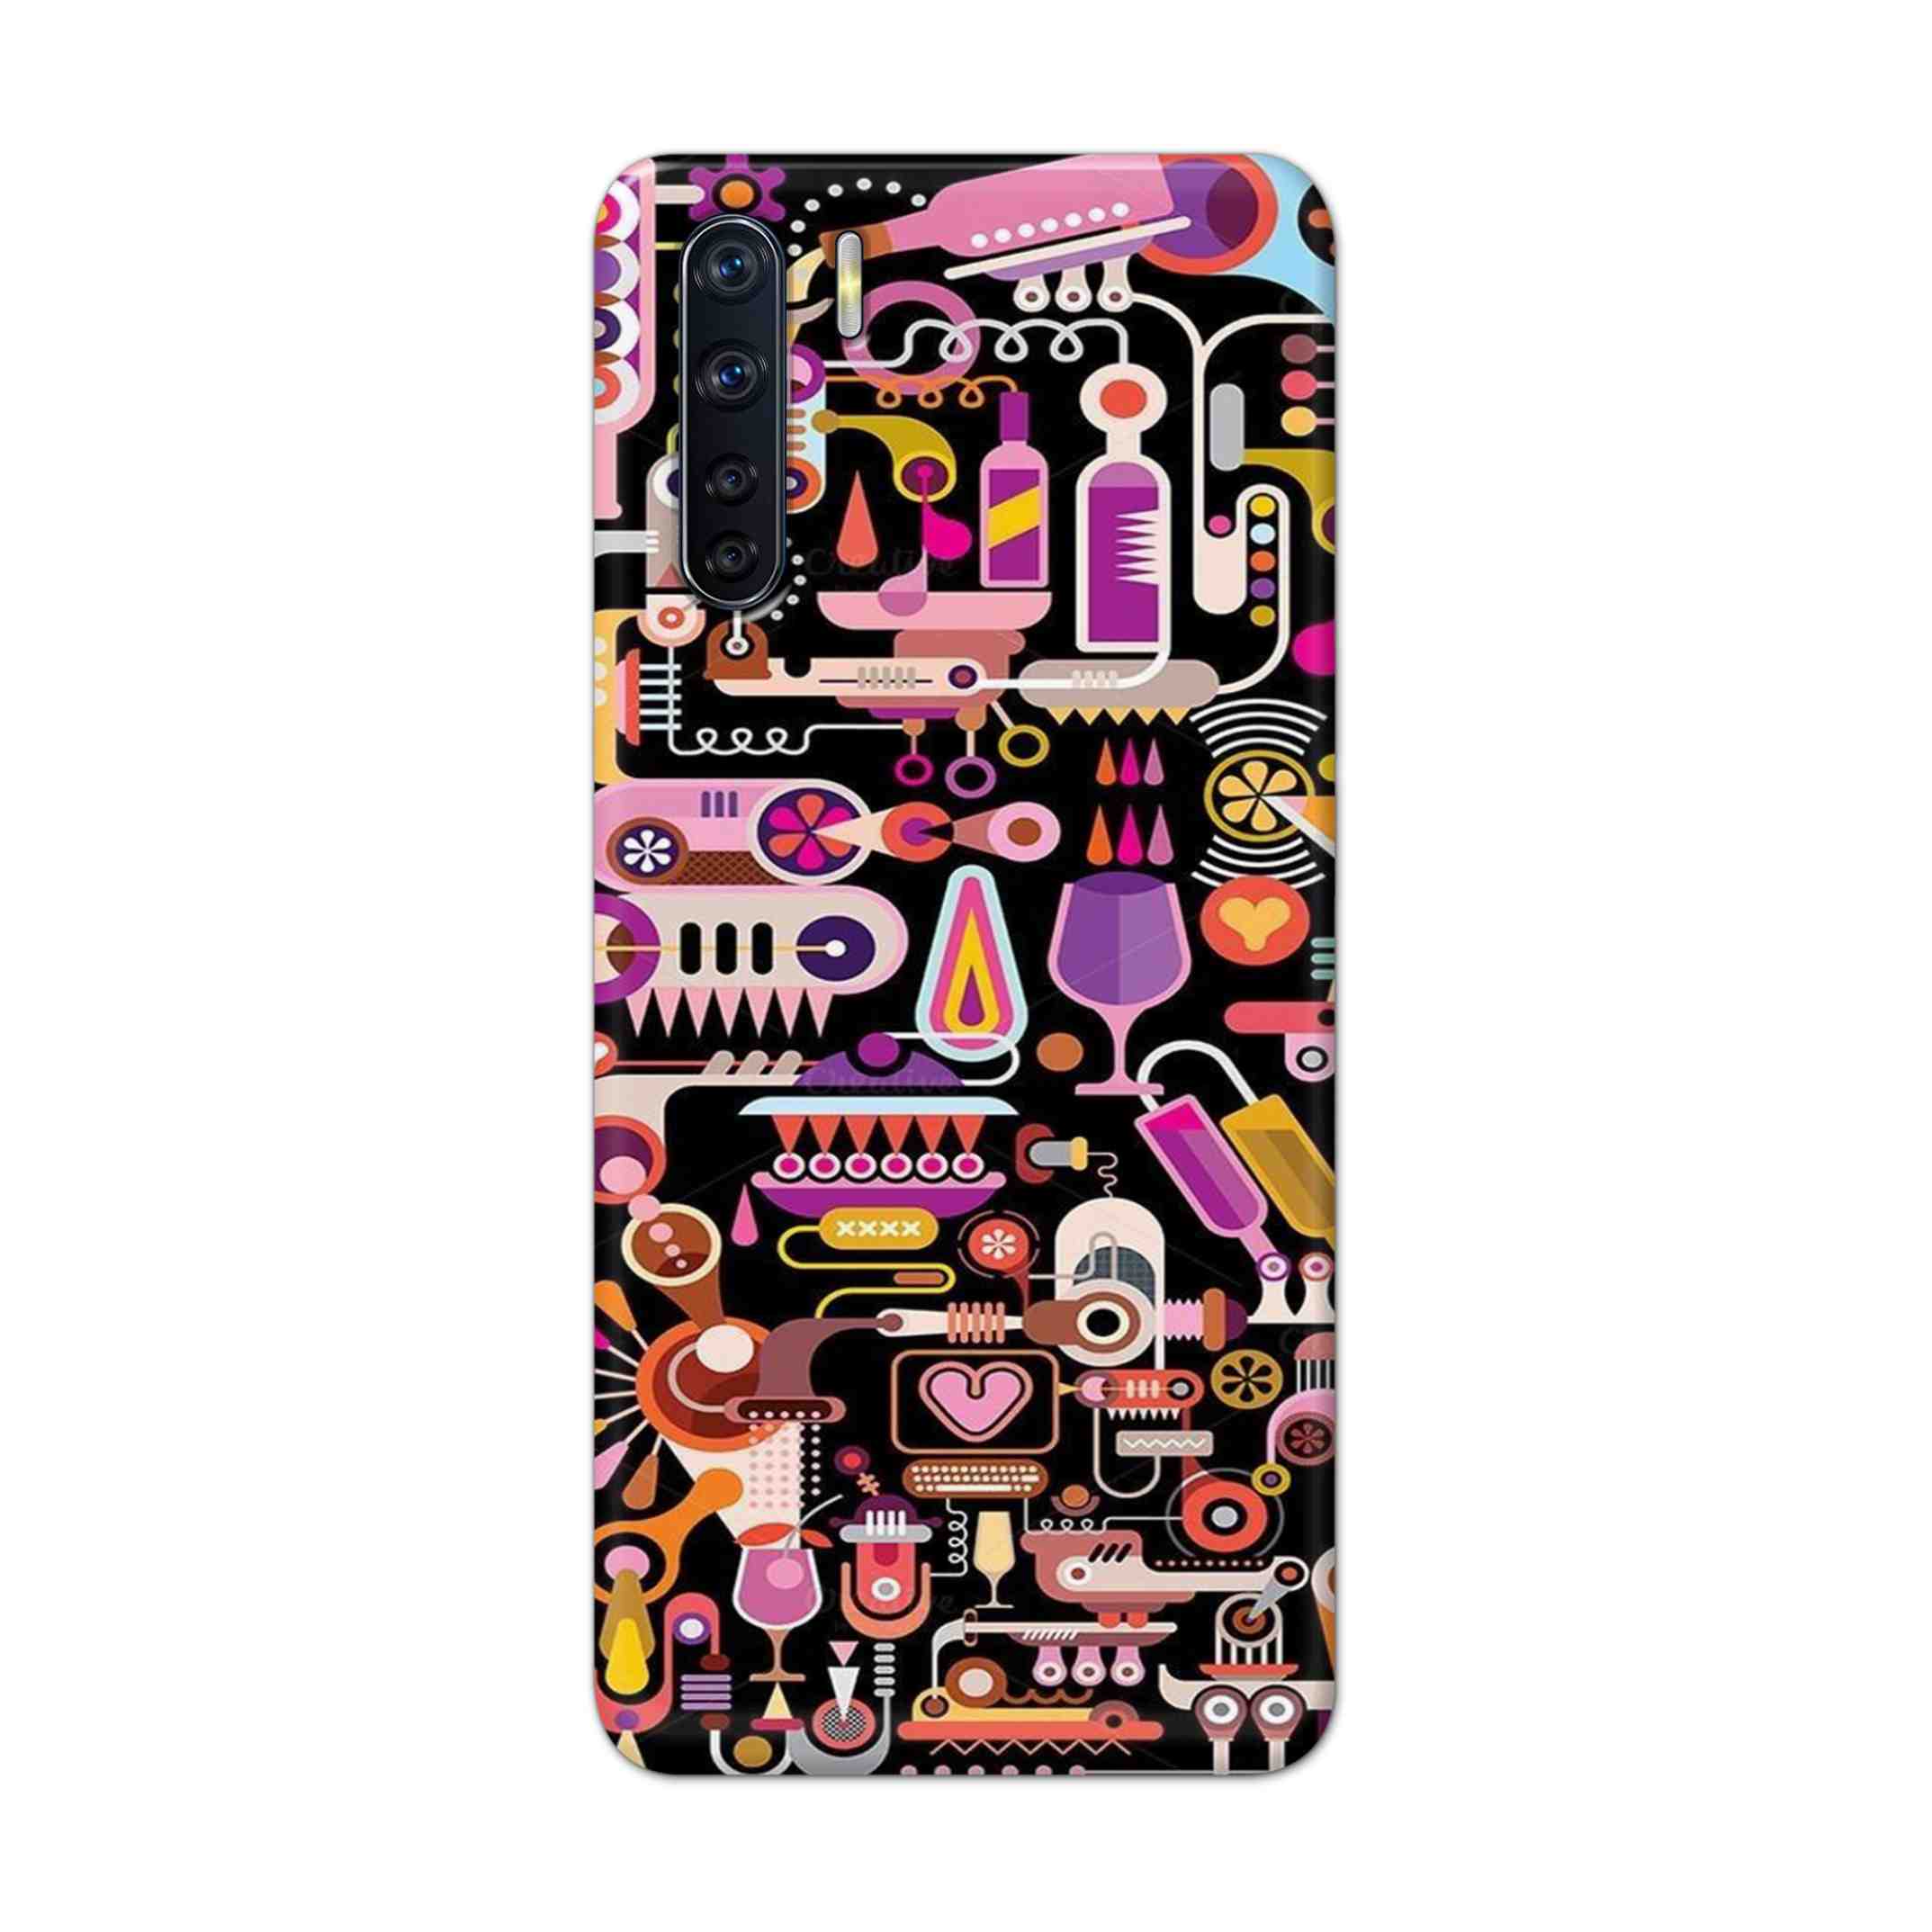 Buy Lab Art Hard Back Mobile Phone Case Cover For OPPO F15 Online